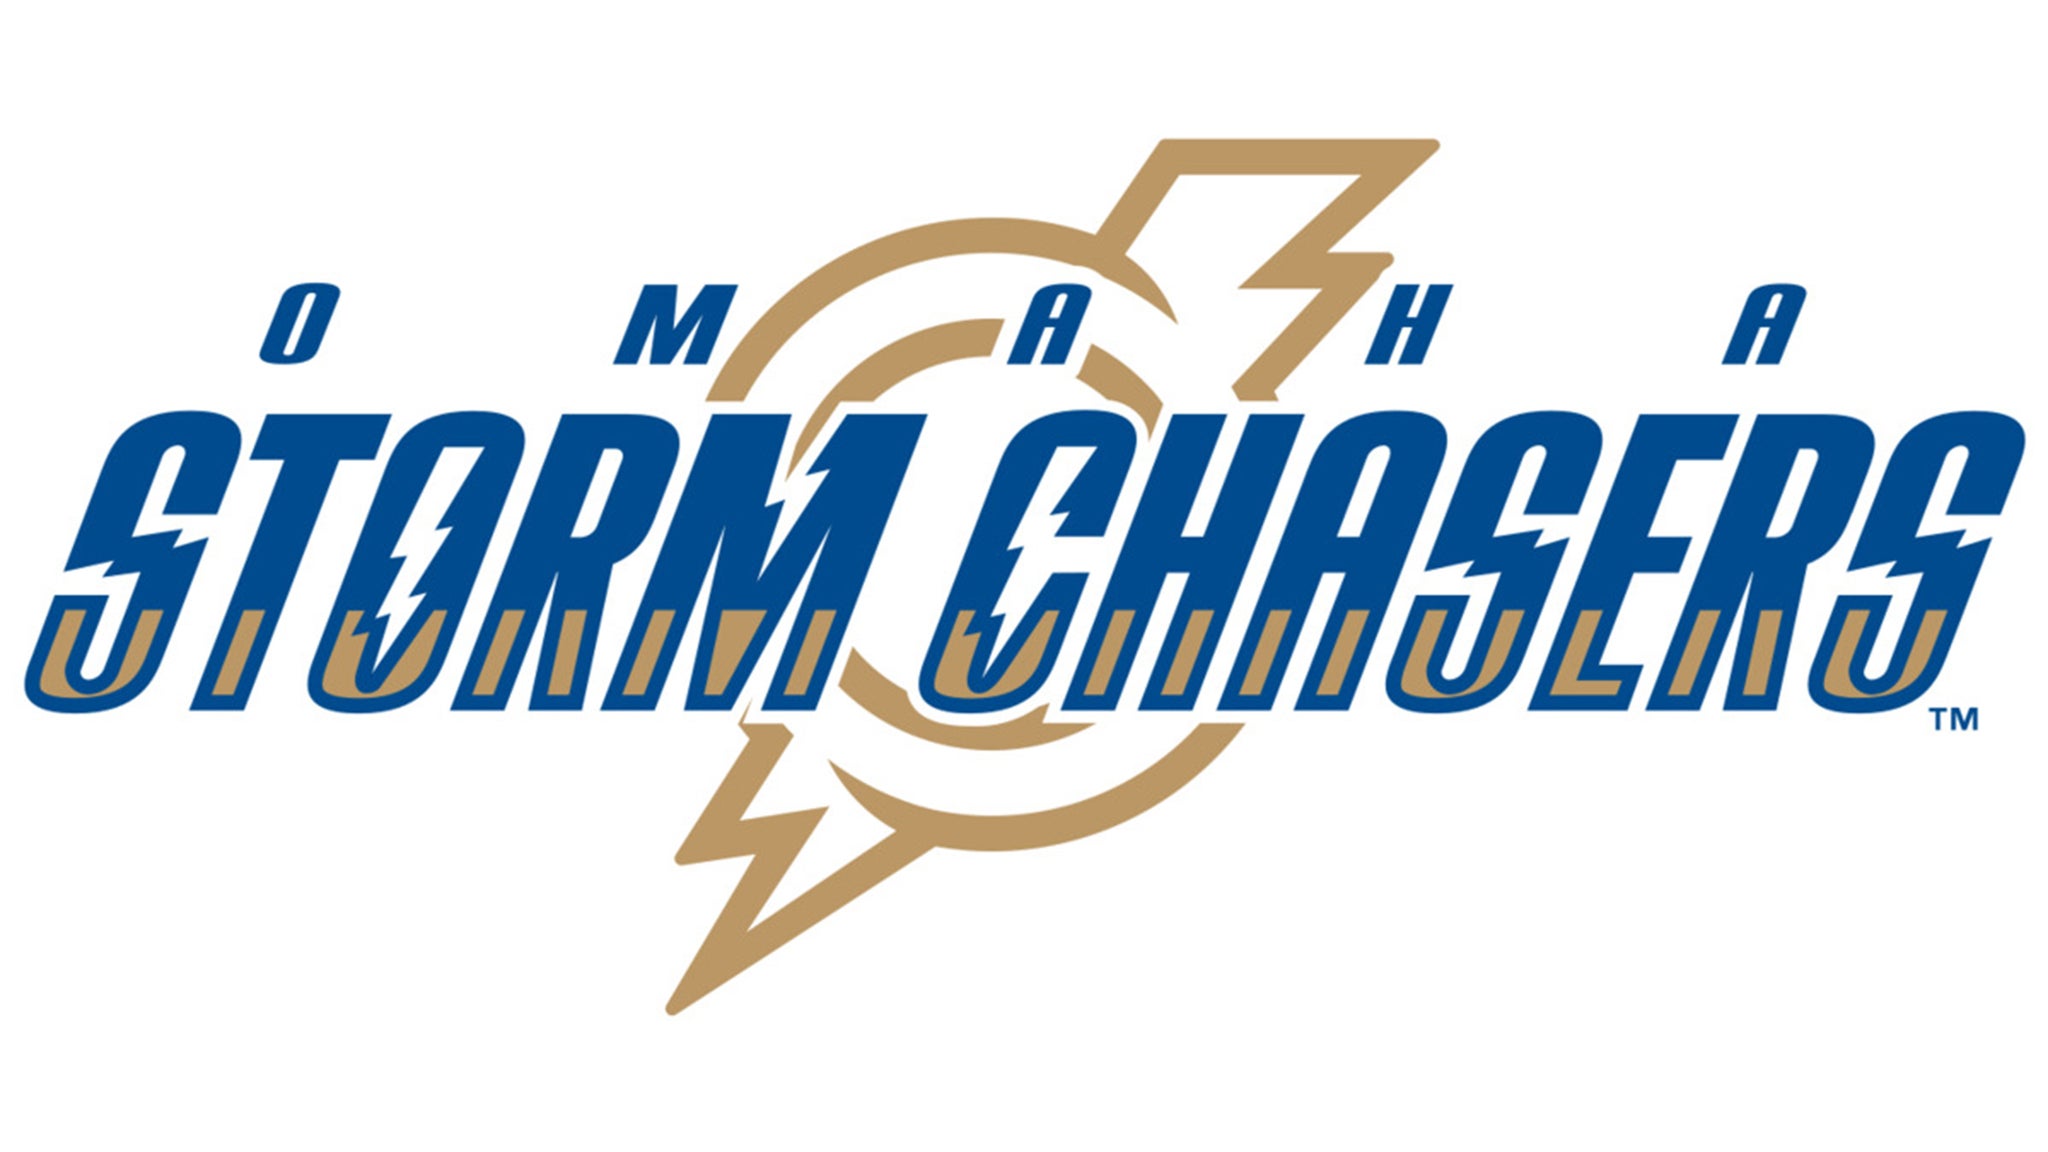 Omaha Storm Chasers vs. Toledo Mudhens